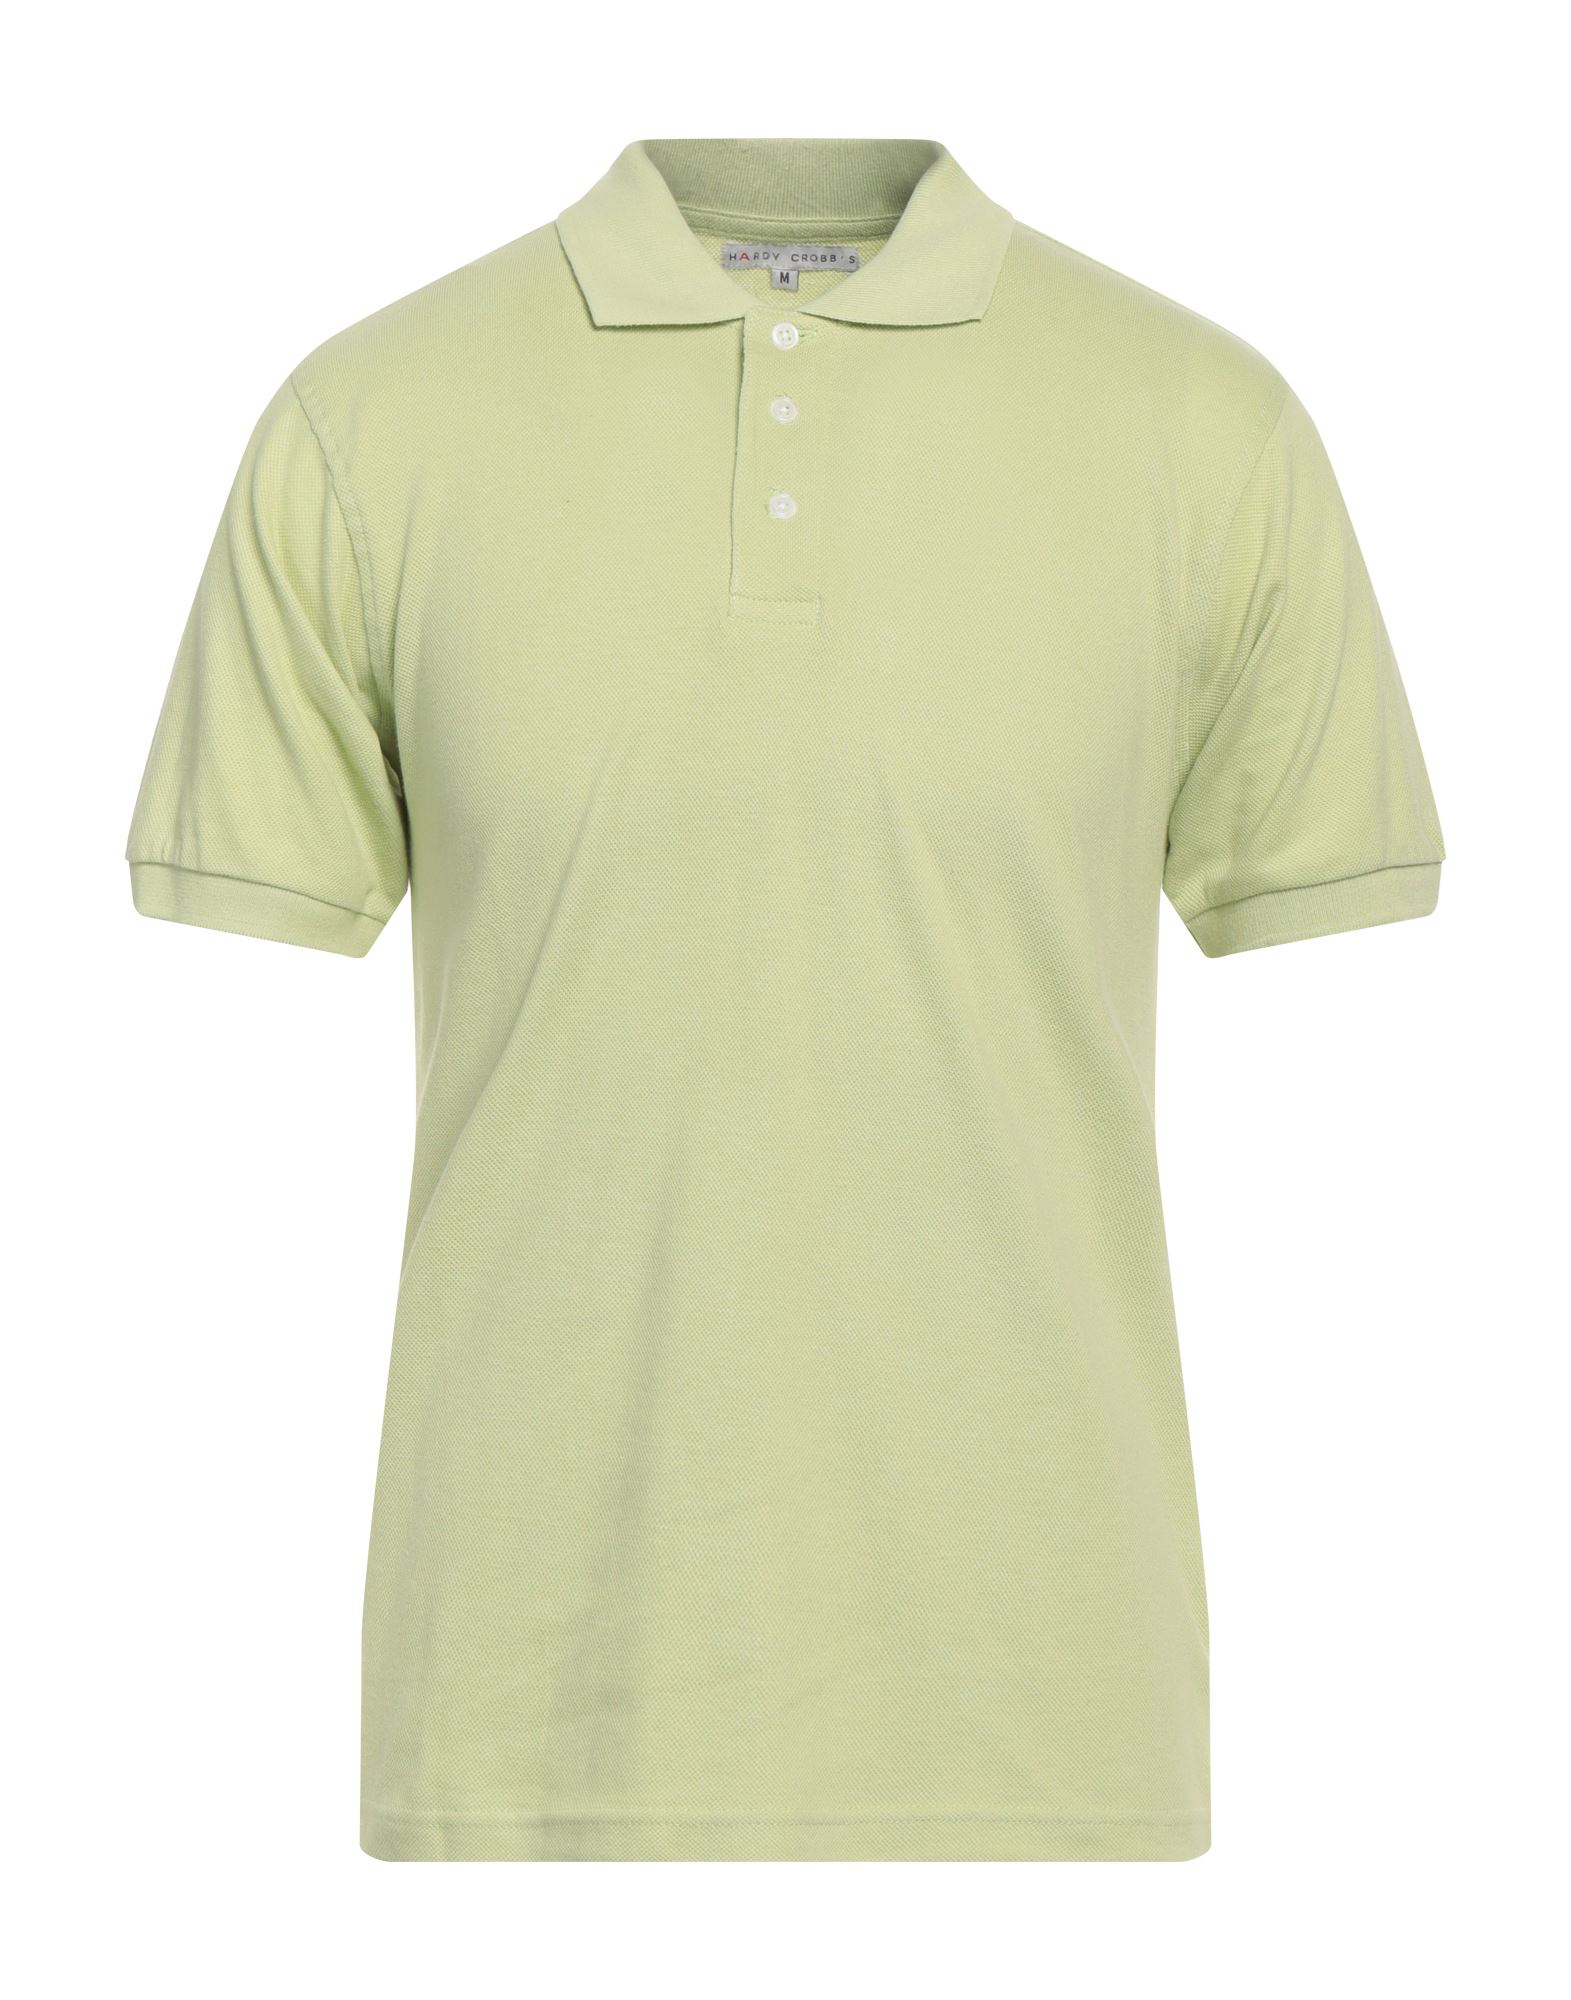 Hardy Crobb's Man Polo Shirt Light Green Size M Cotton